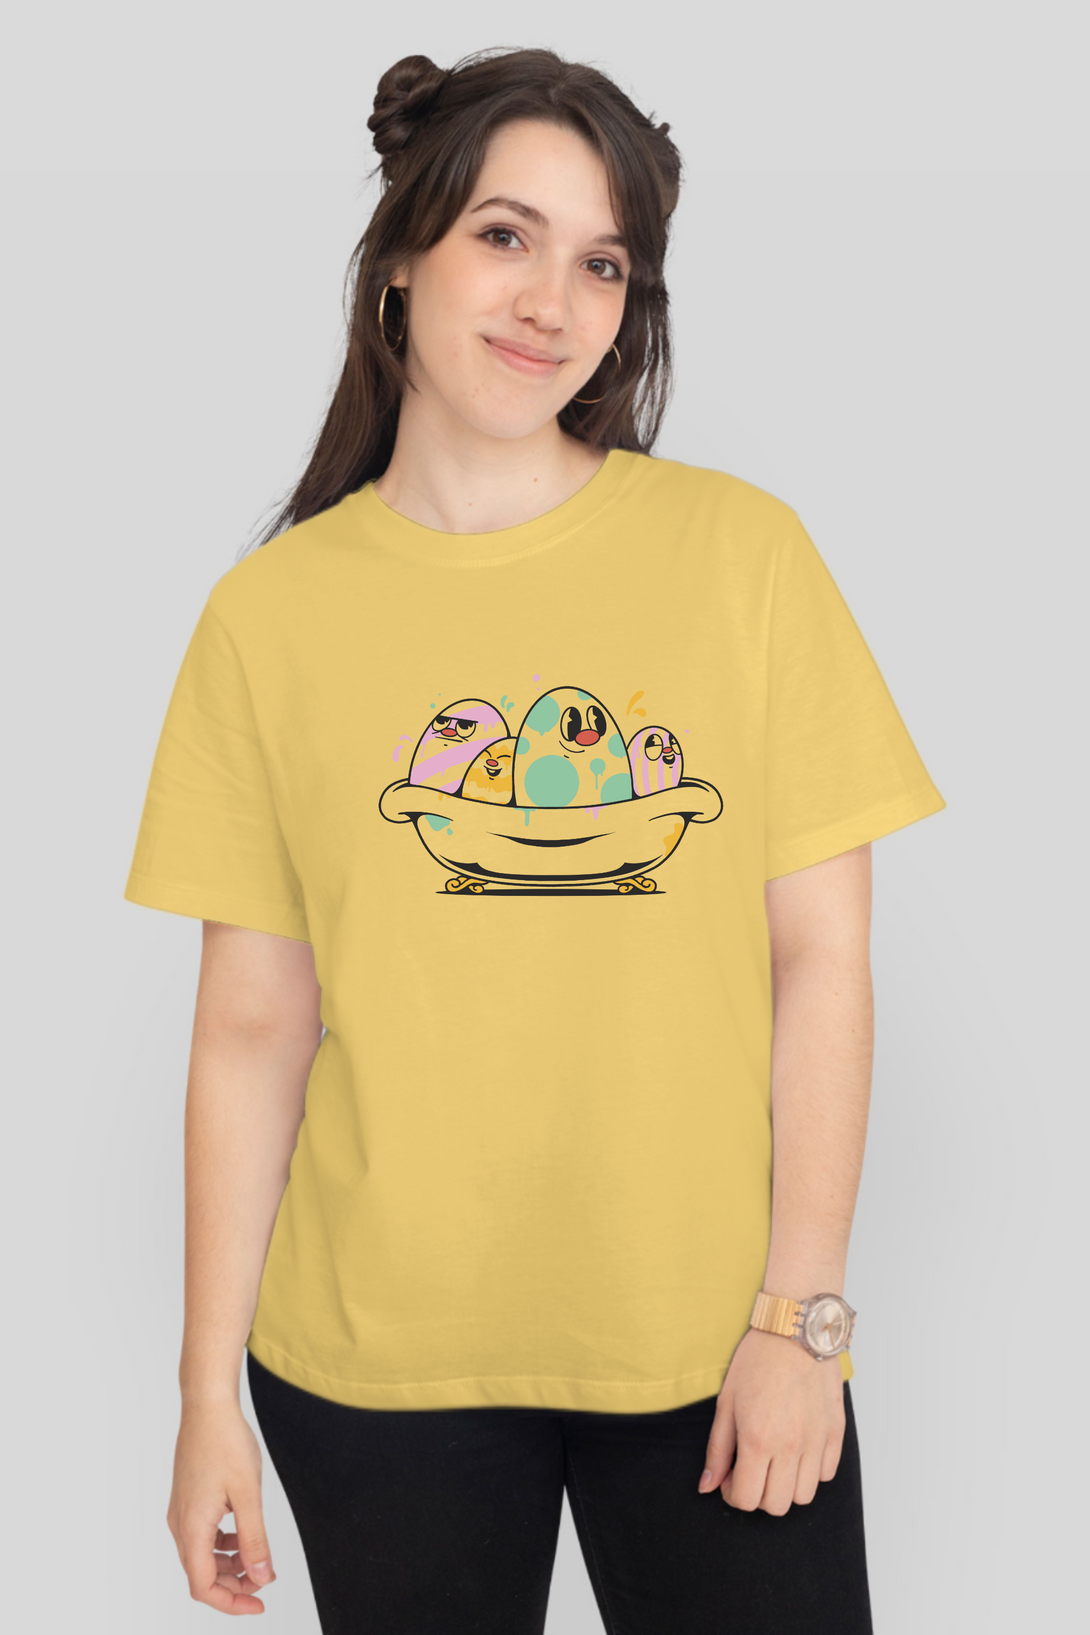 Eggcellent Bathtub Printed T-Shirt For Women - WowWaves - 6